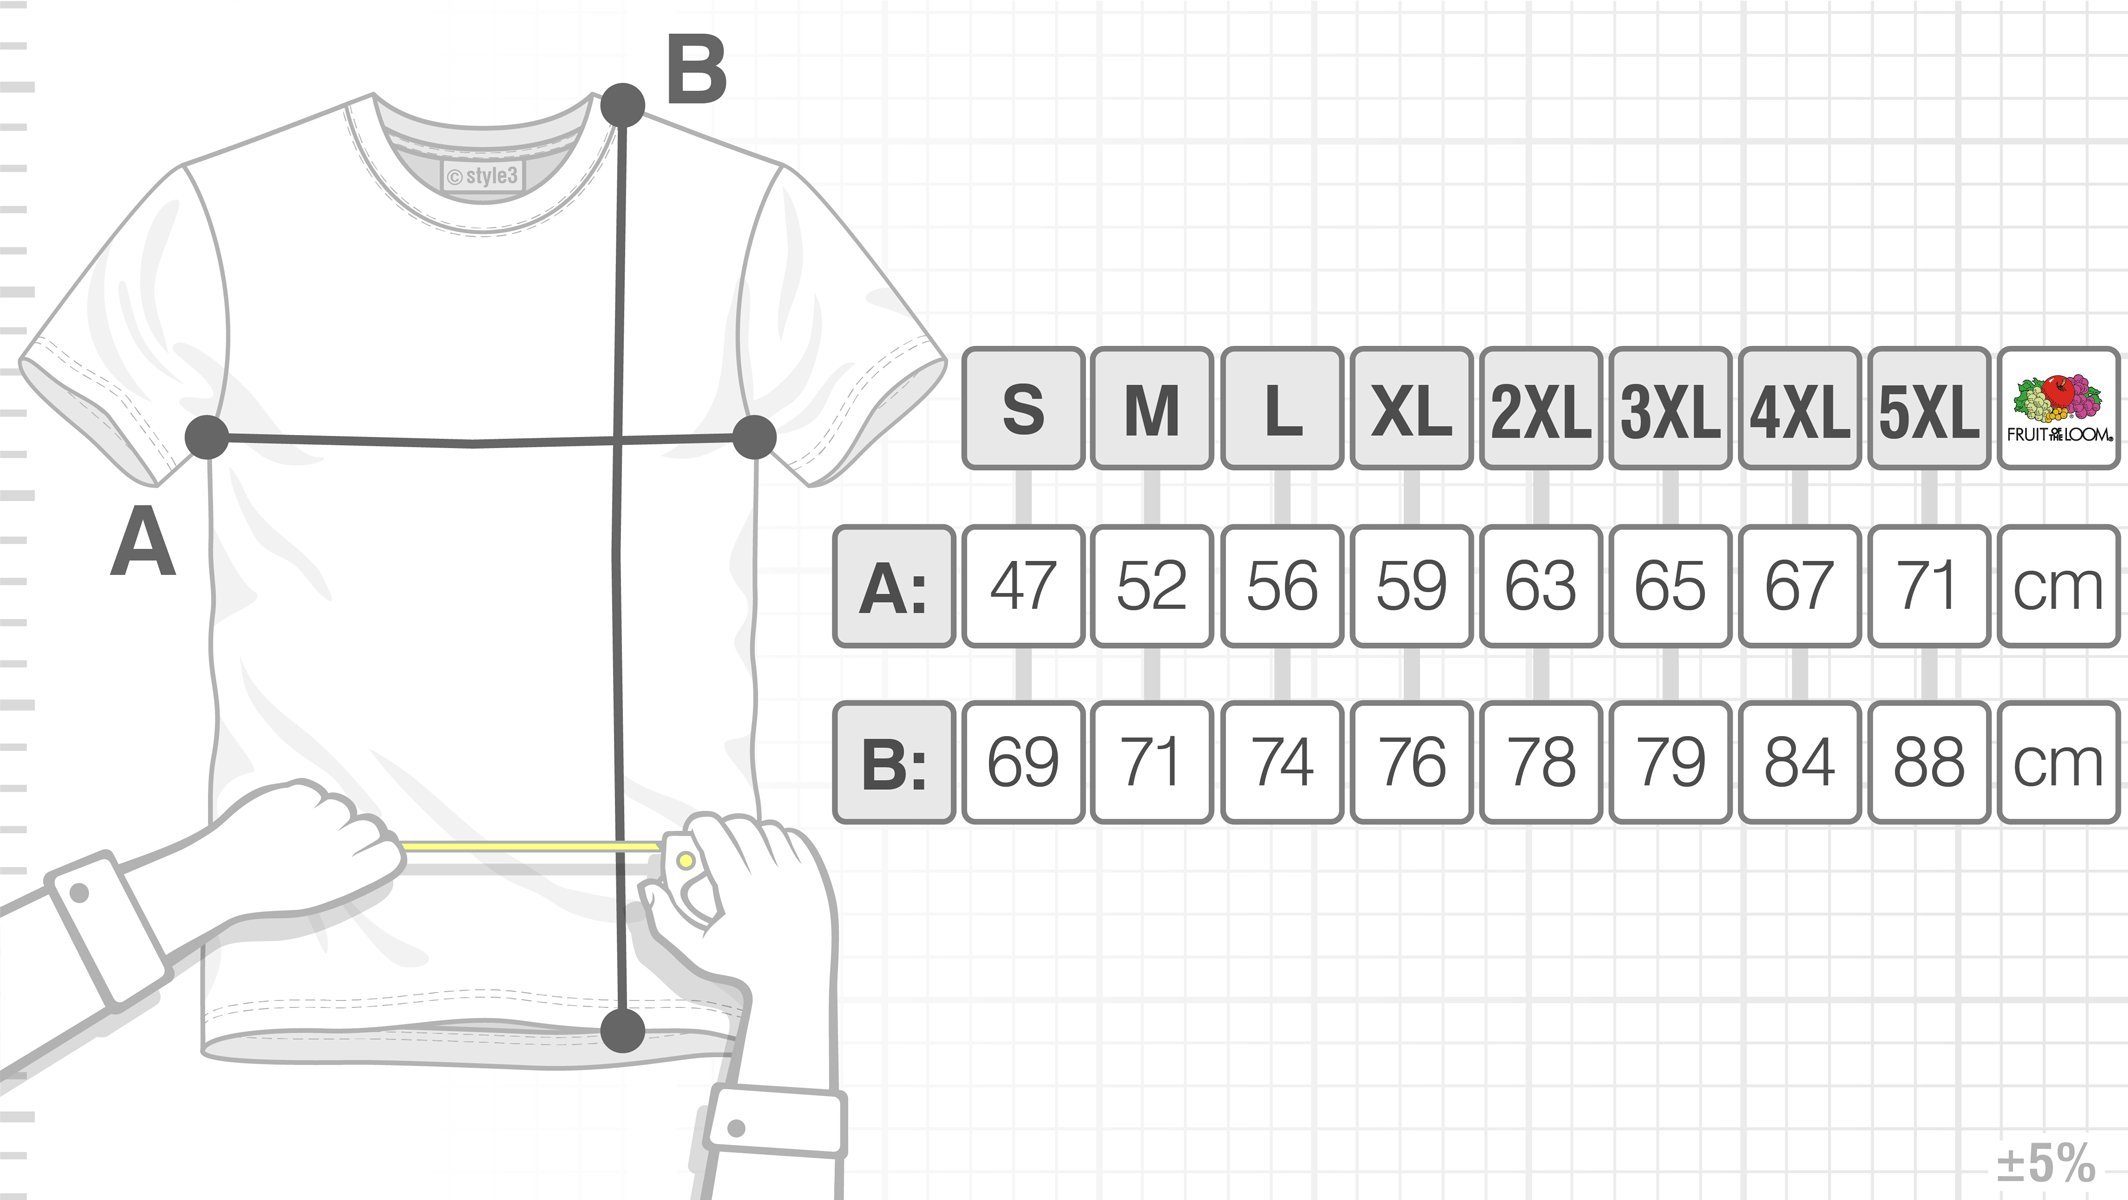 style3 Print-Shirt Herren T-Shirt Pixel bros switch nes Mega Level lite smash 8bit